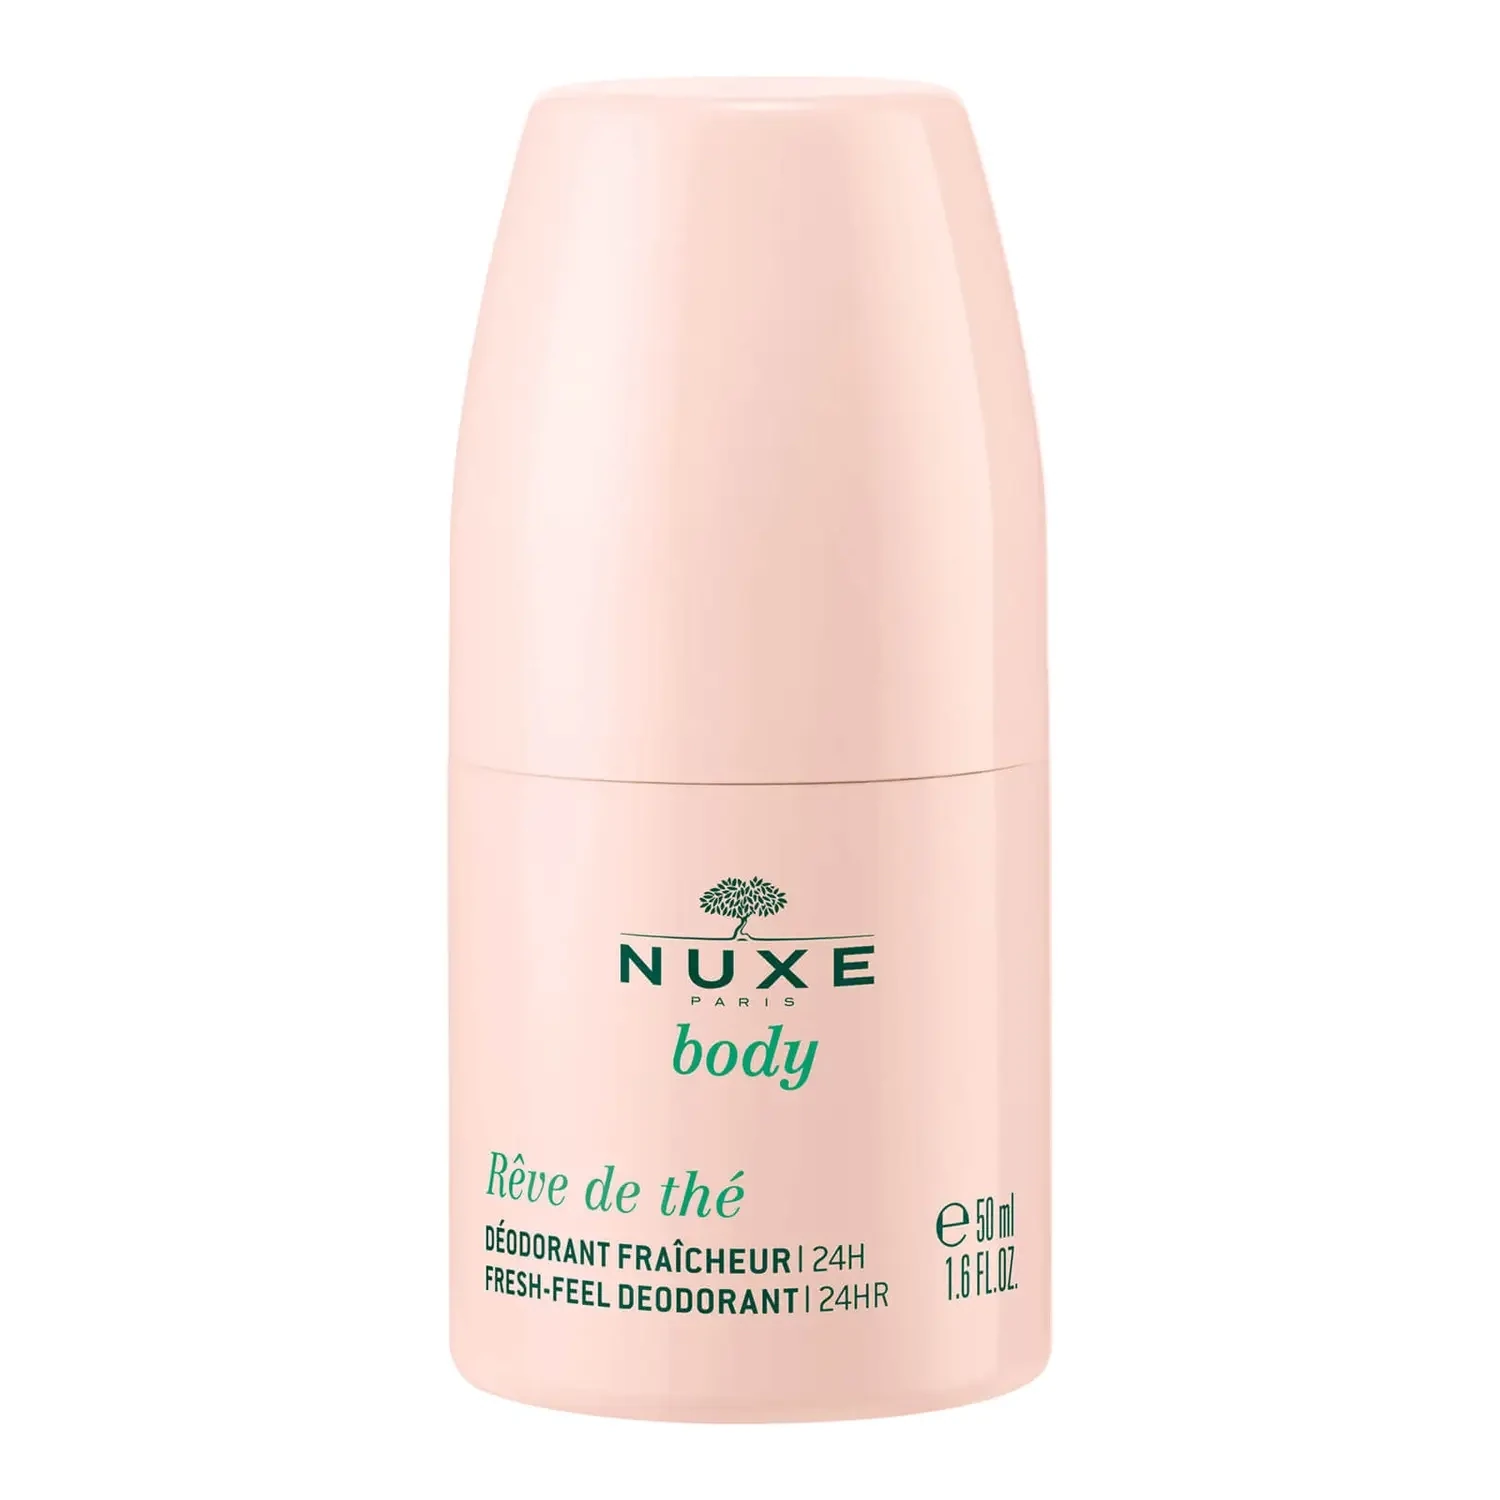 NUXE - Refreshing Deodorant 24HR, Rêve de Thé | 50 mL